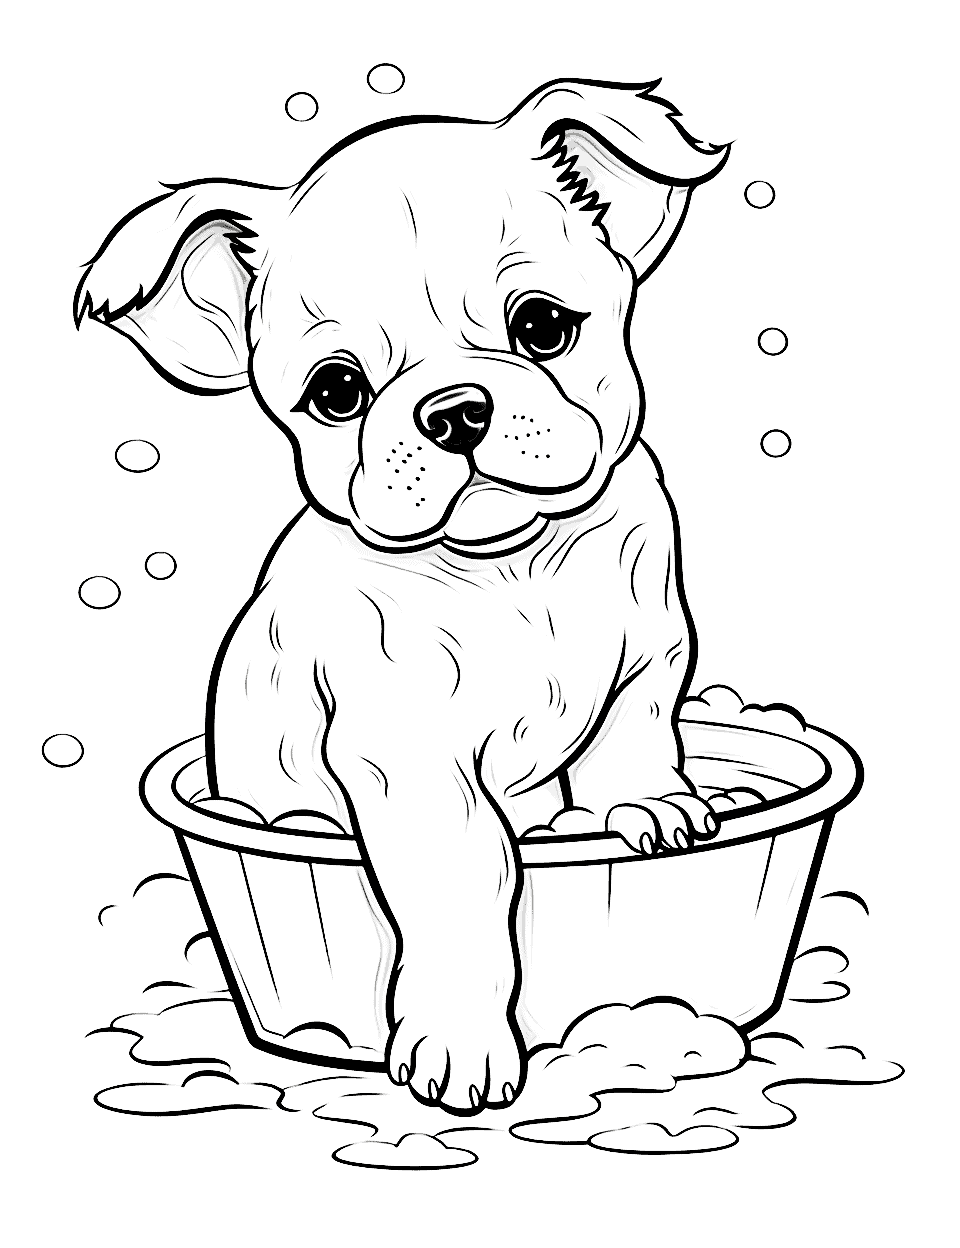 Bathing Time Bulldog in a Bathtub Puppy Coloring Page - A Bulldog puppy sitting in a bathtub filled with bubbles.